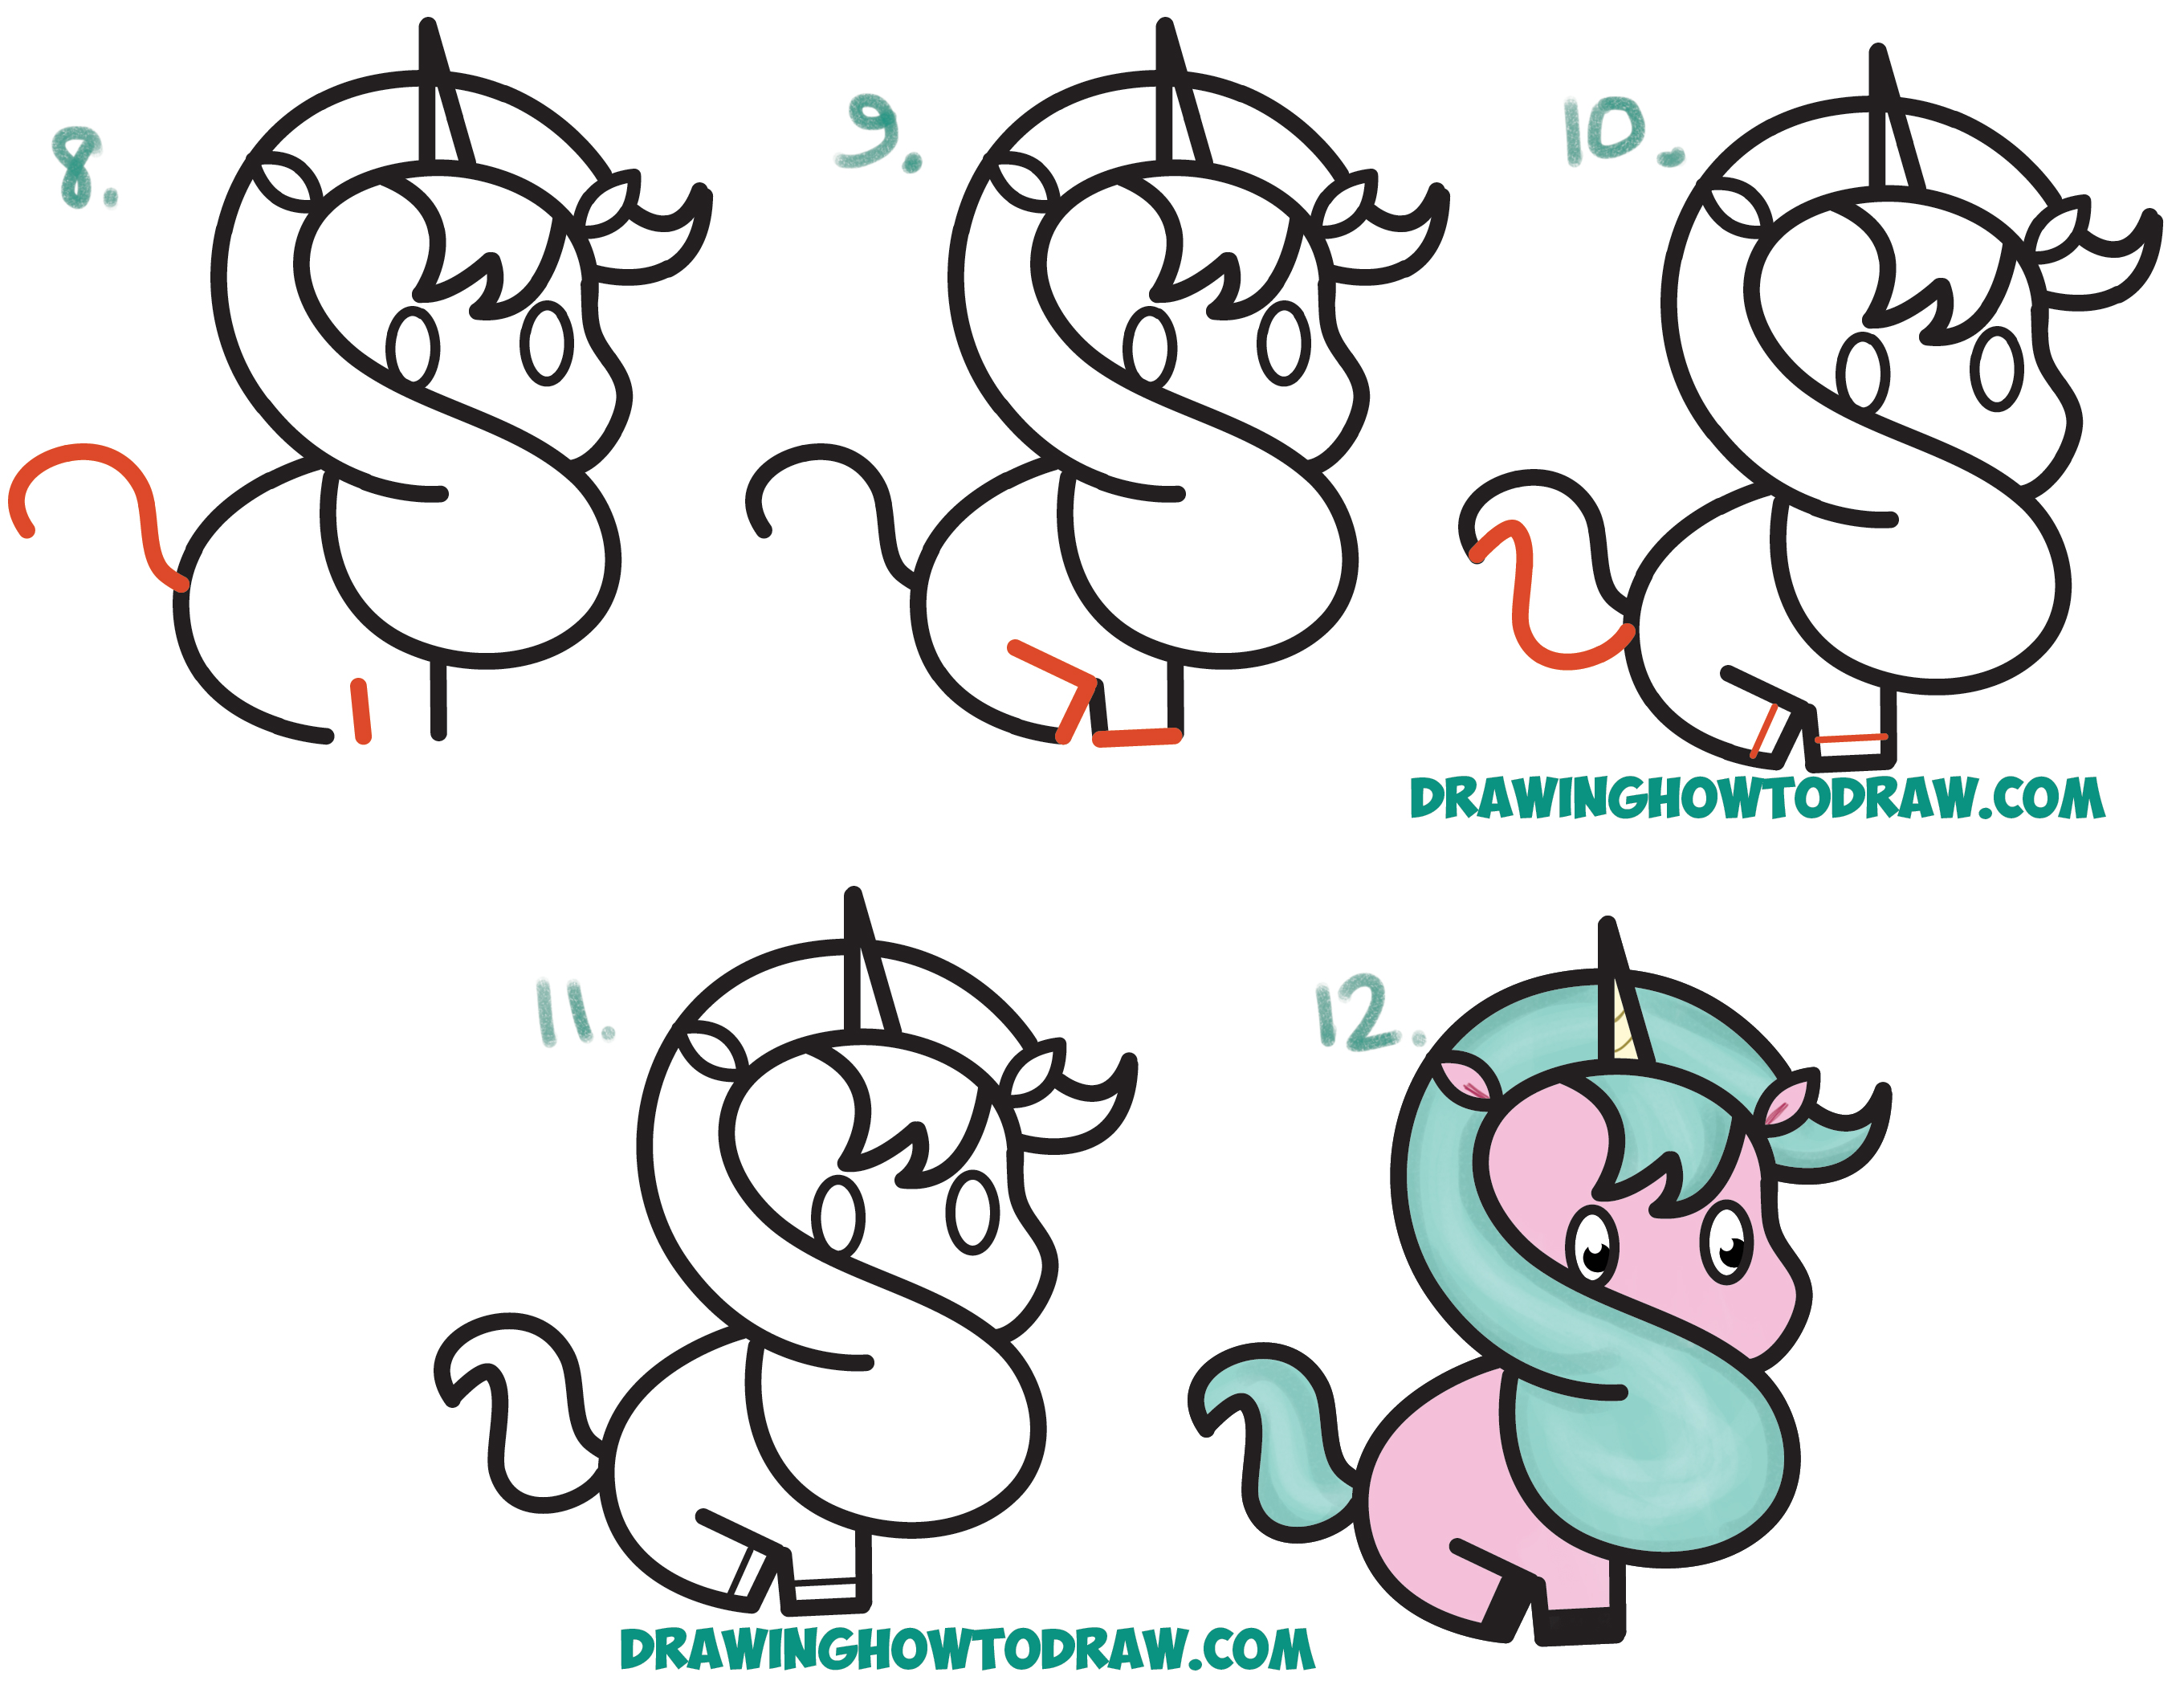 How to Draw a Cute Cartoon Unicorn (Kawaii) from a Dollar ...